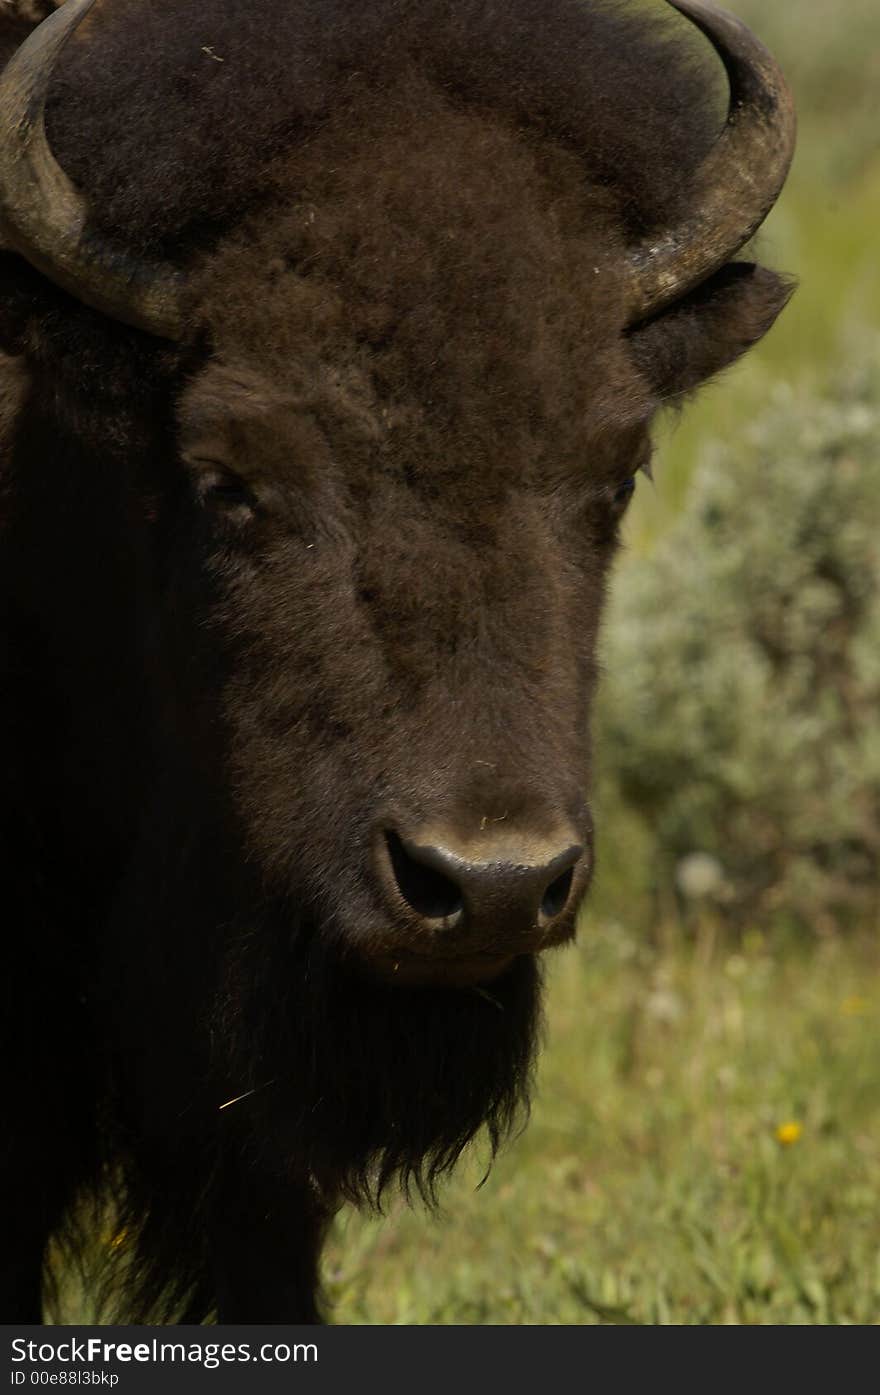 Buffalo grazing near the Grand Tetons outside of Jackson, Wyoming.